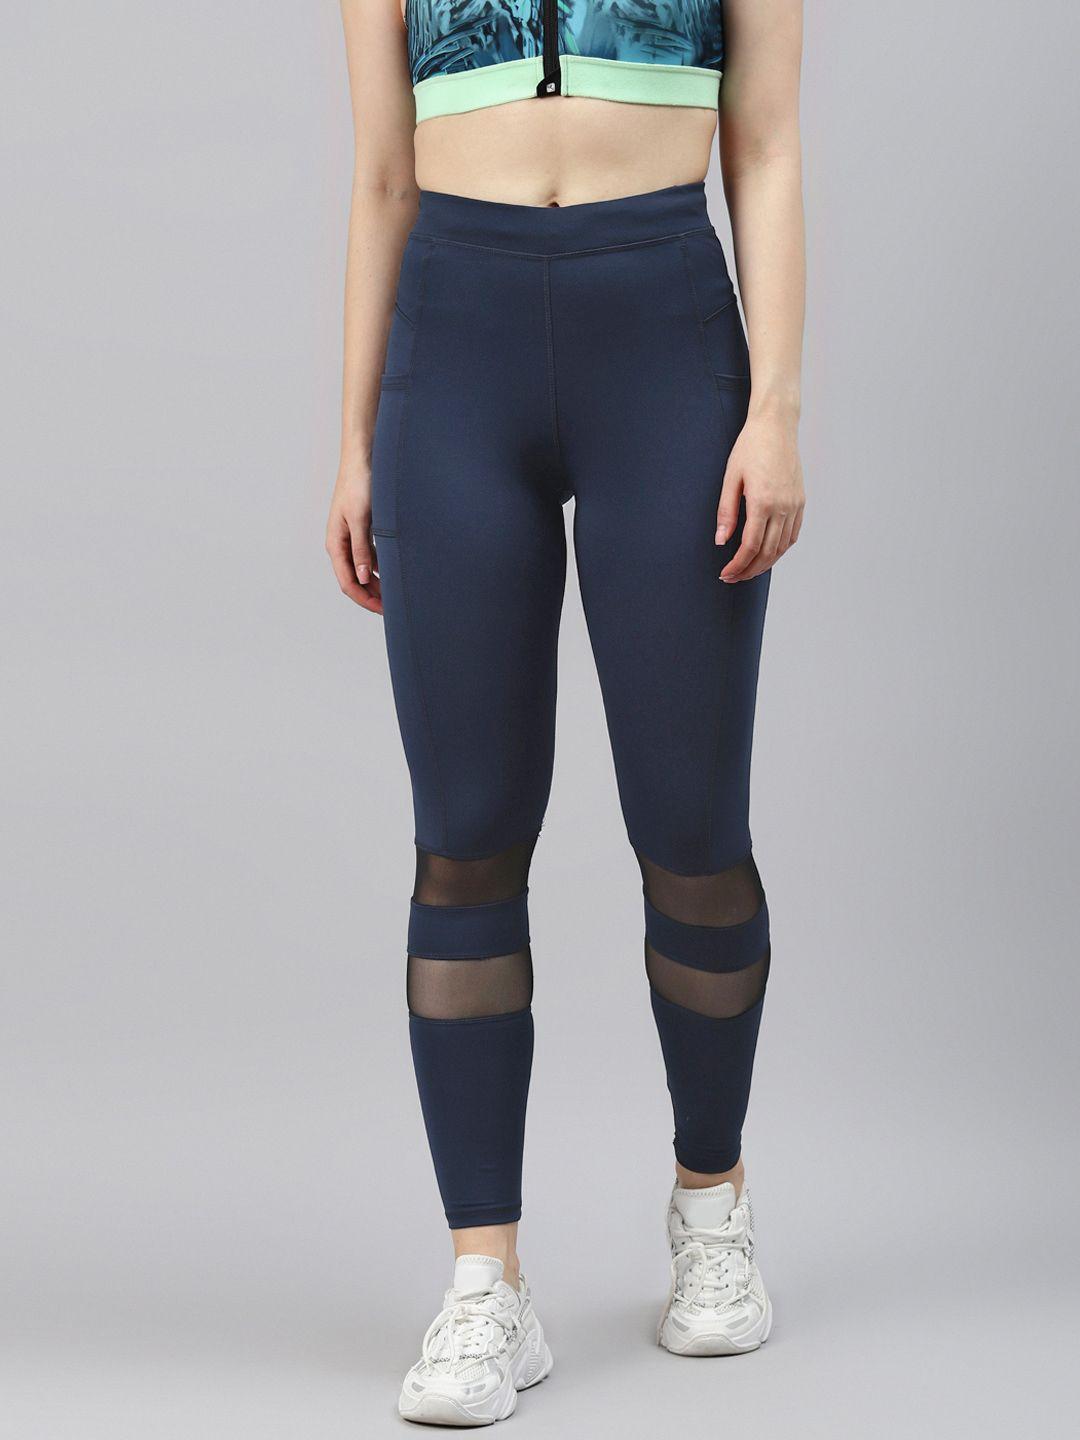 blinkin women navy blue solid mesh paneled gym tights